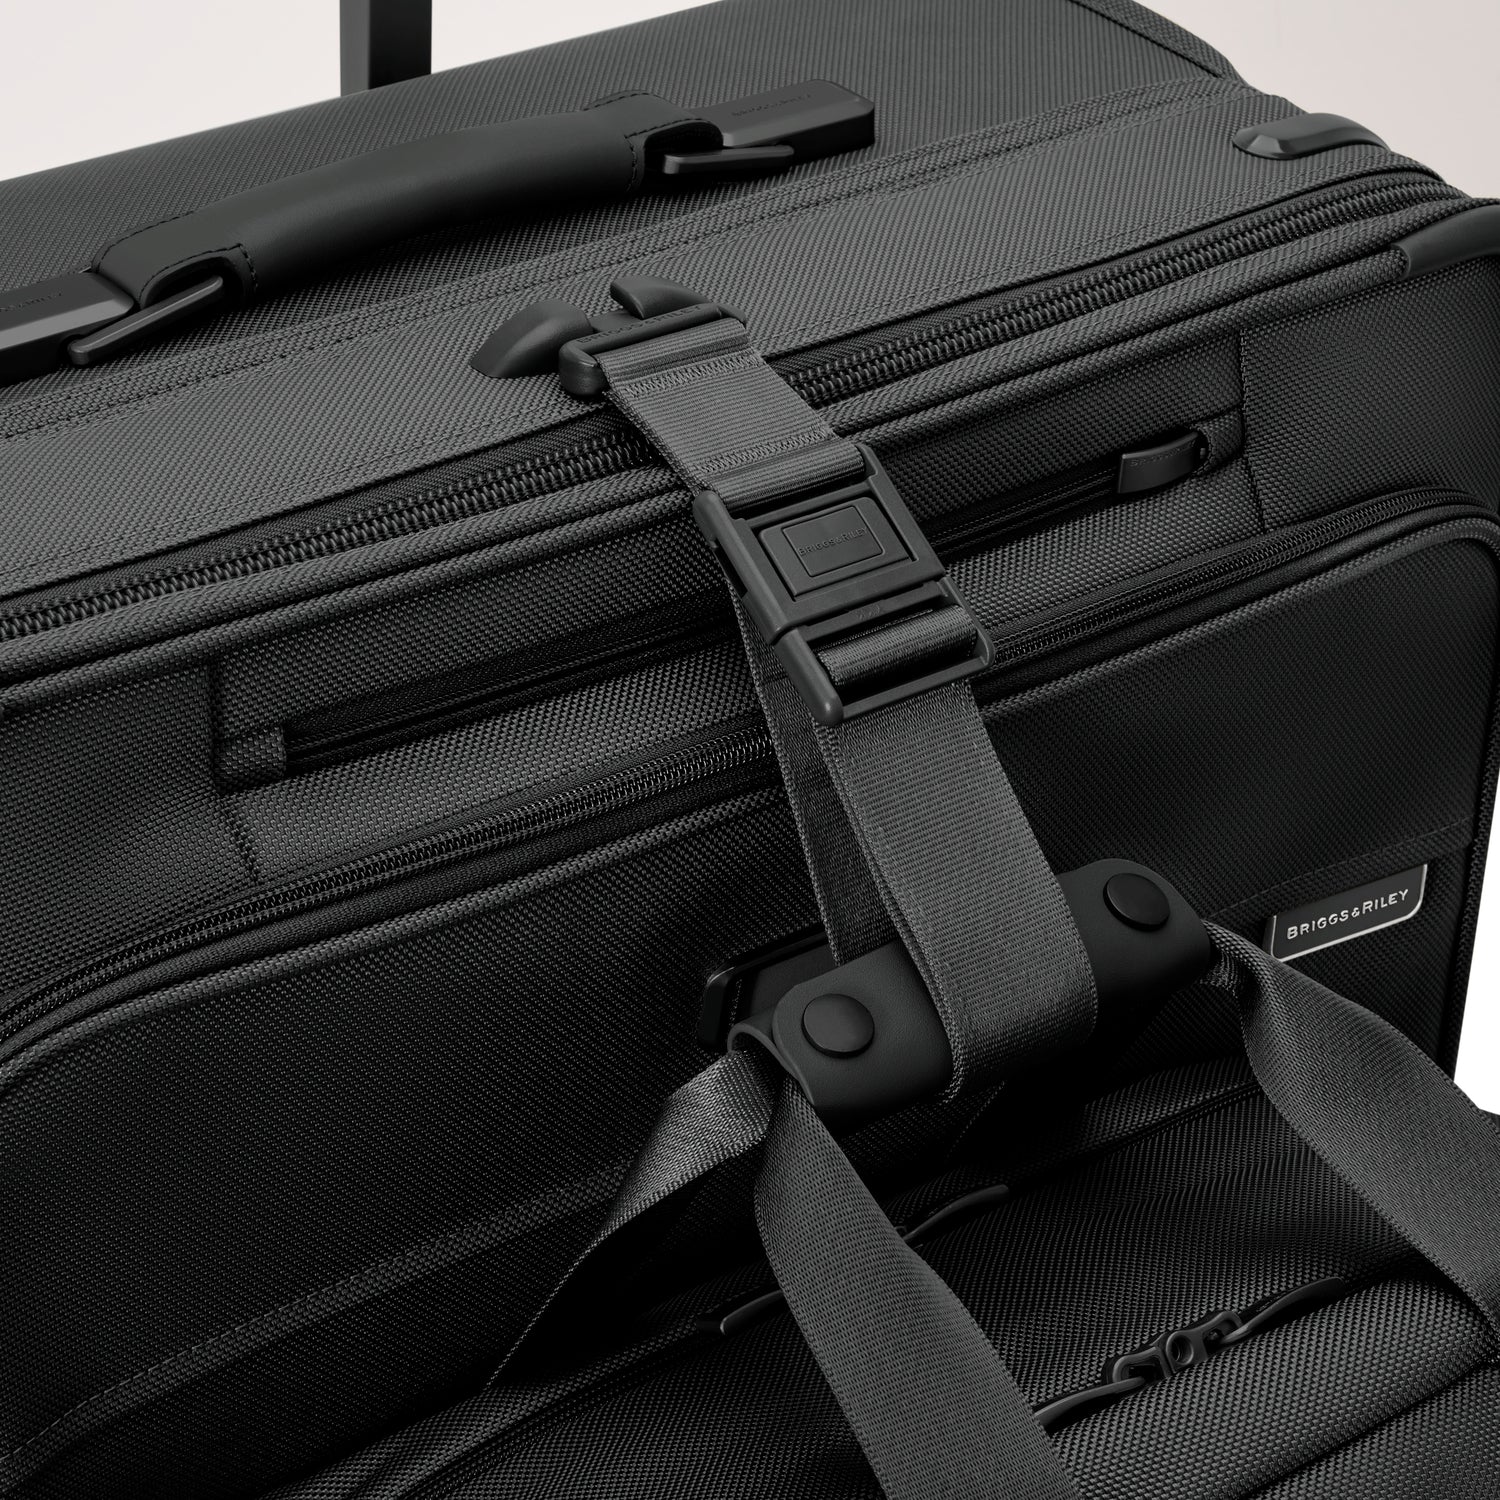 Briggs & Riley Baseline Black Carry-On 2-Wheel Garment Bag